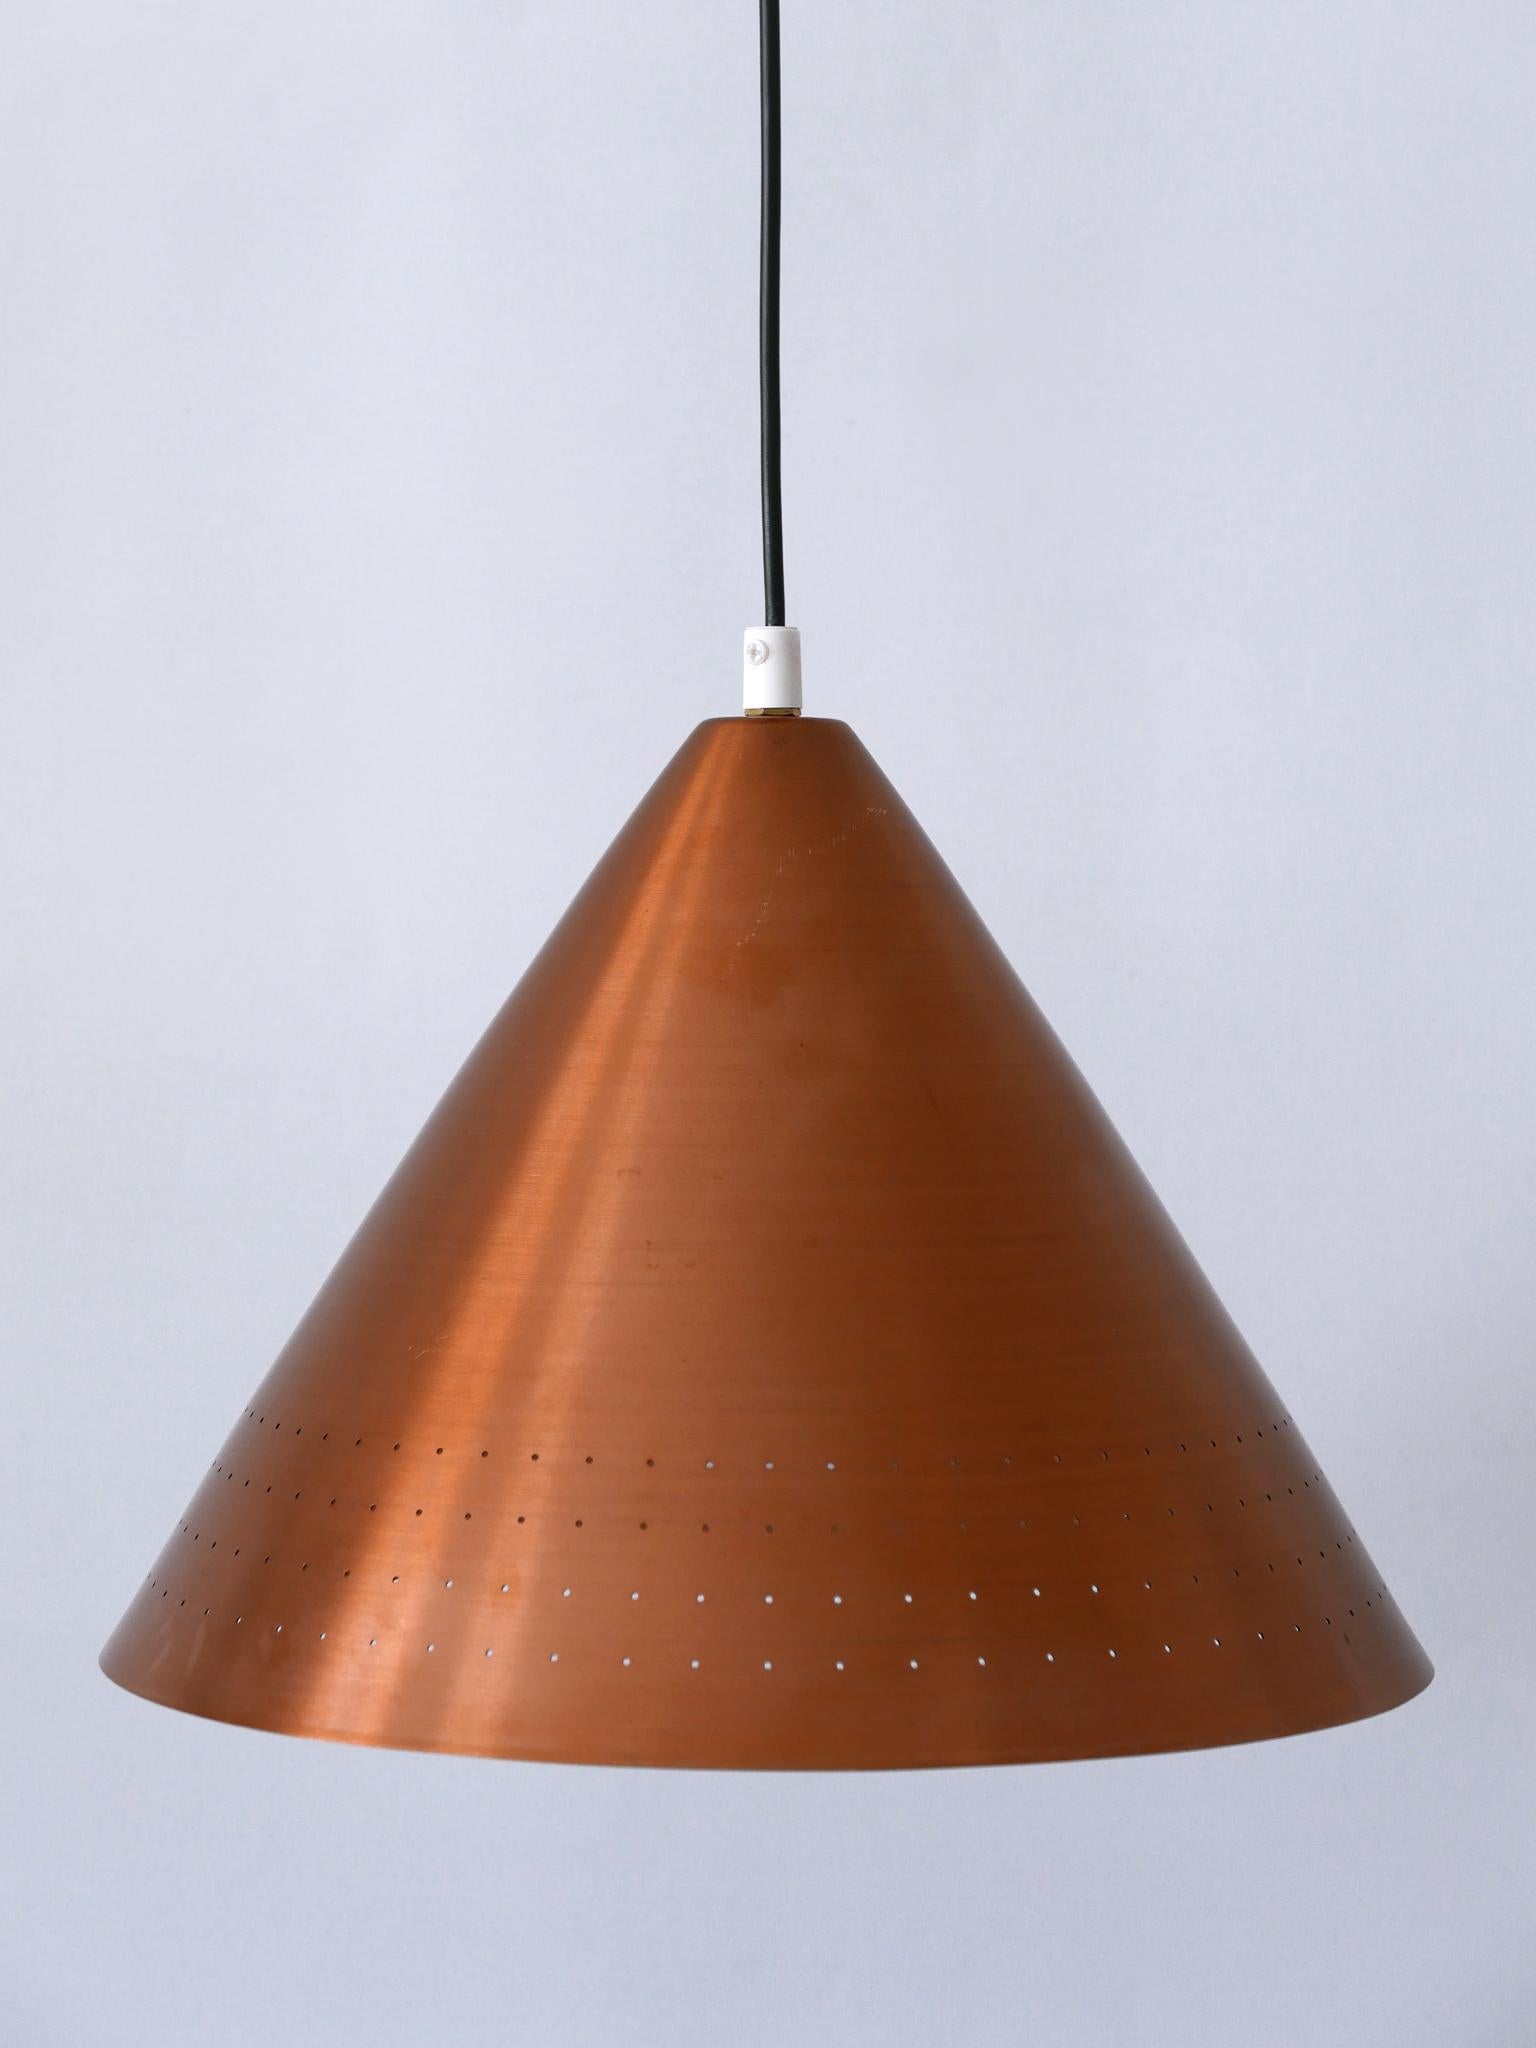 Rare Mid-Century Modern Scandinavian Copper Pendant Lamp or Hanging Light  1960s For Sale 3